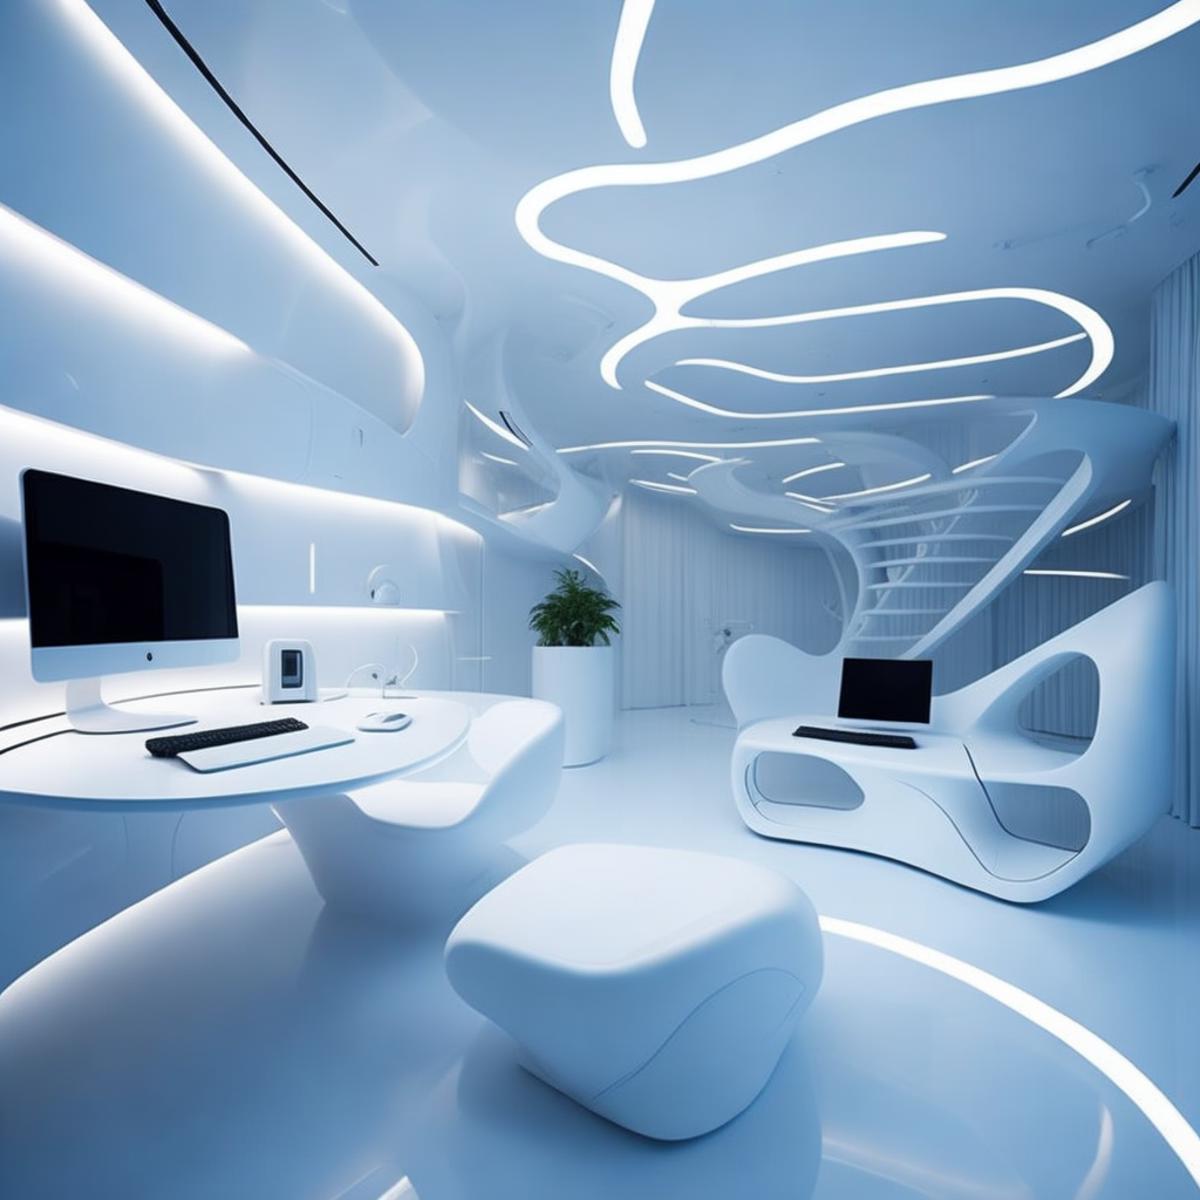 Bionic futuristic interior design image by Sa_May